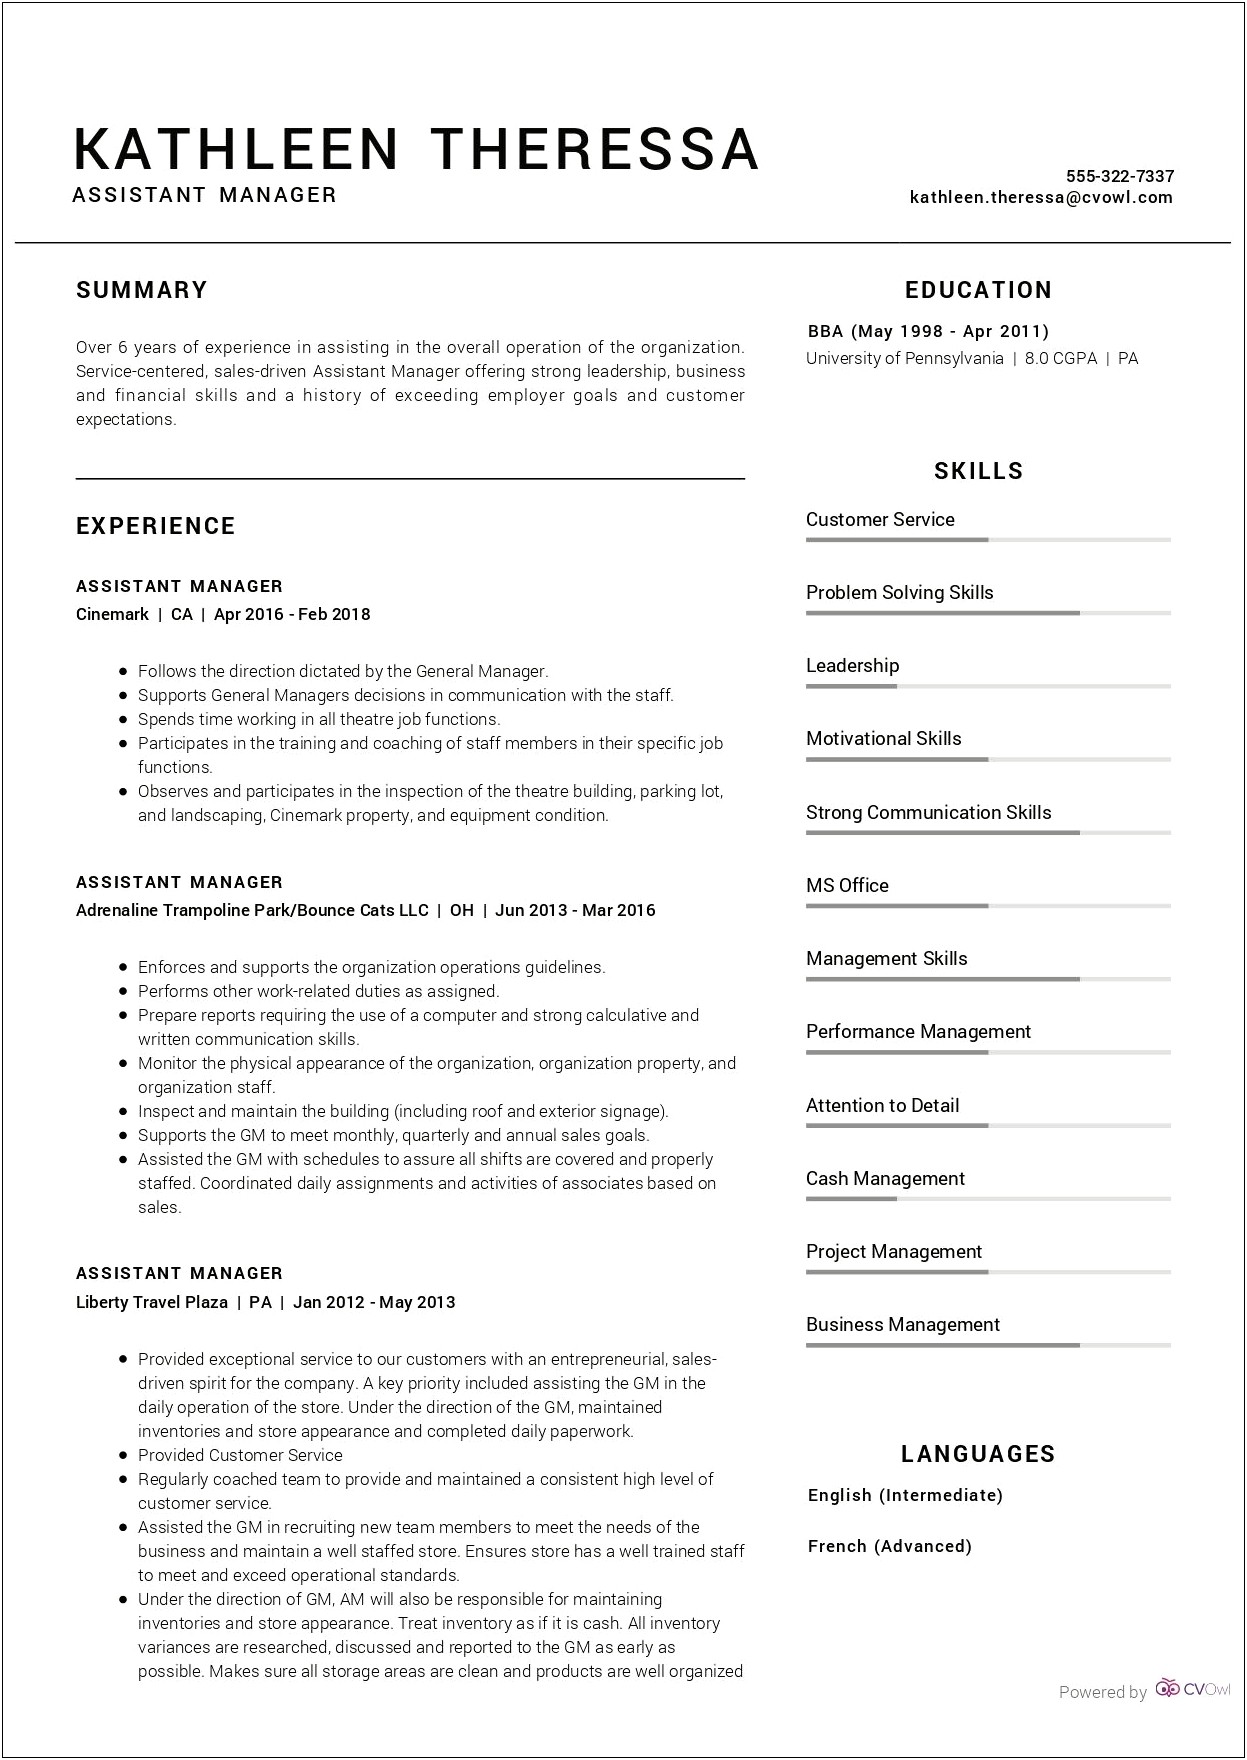 Resume Sentences For A Manager